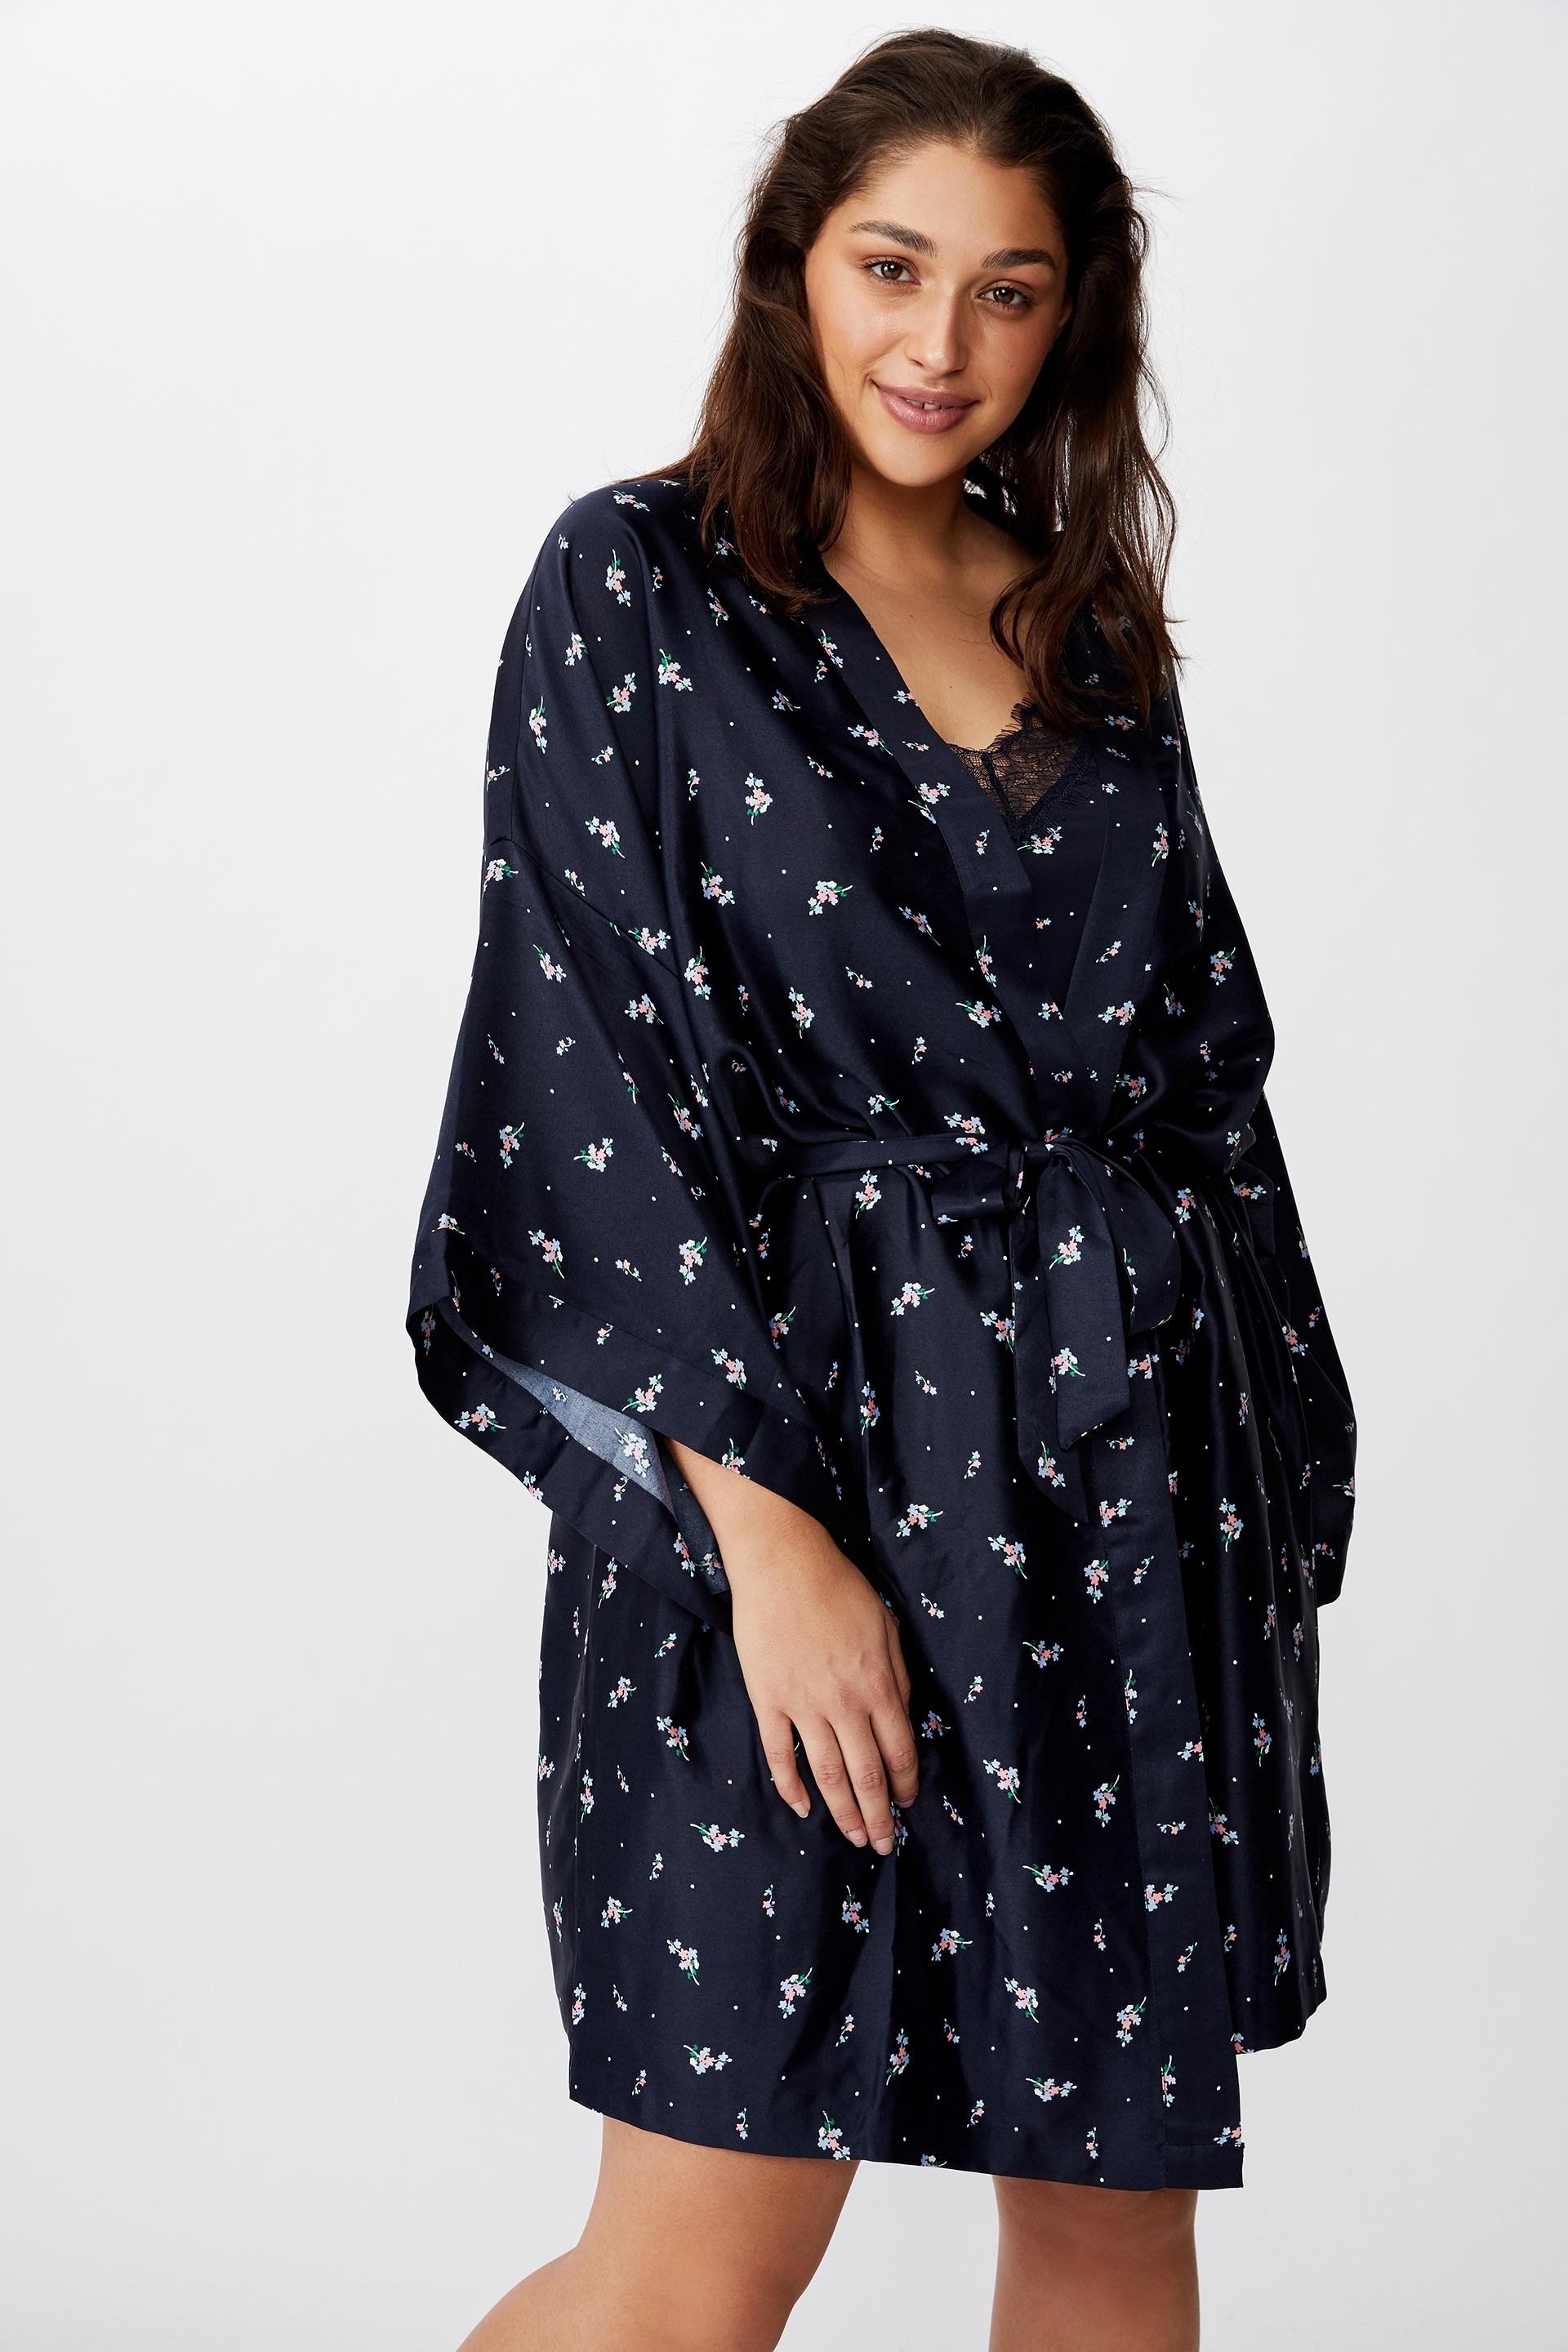 Curve satin kimono gown - floral navy Cotton On Sleepwear | Superbalist.com